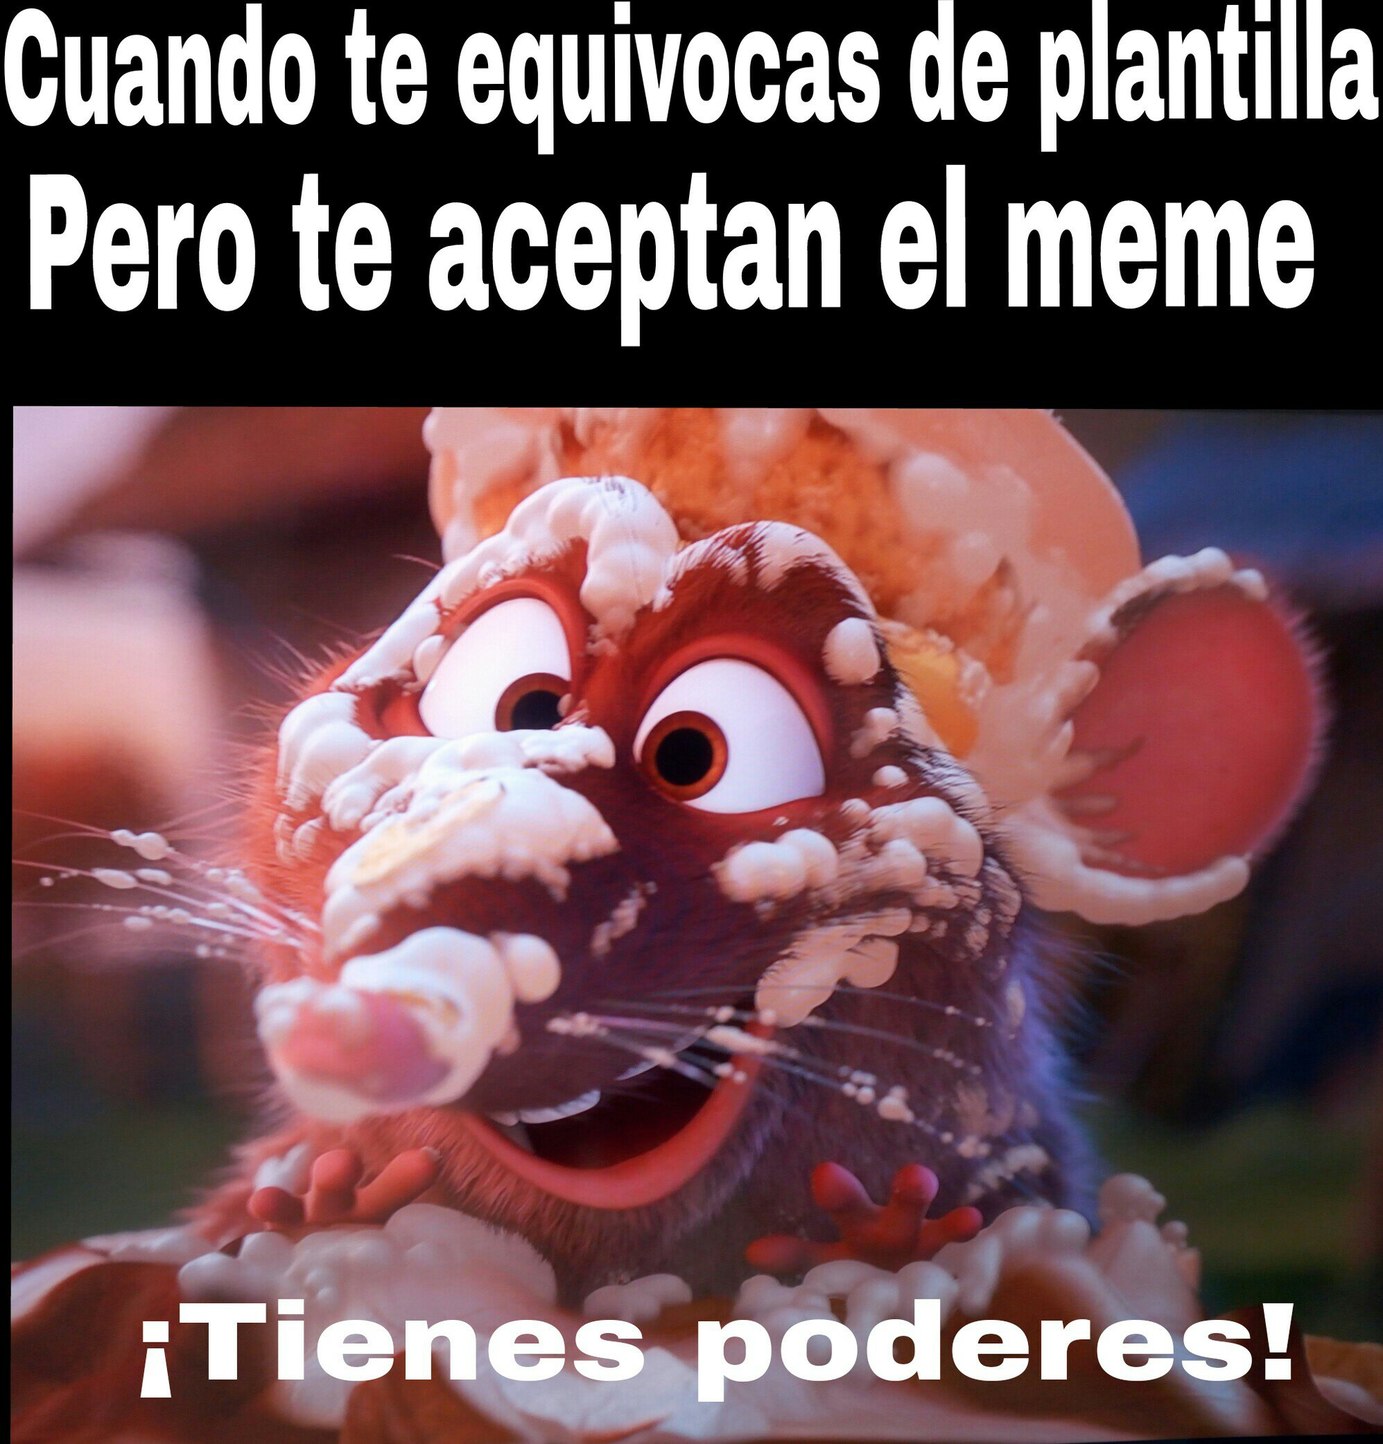 Plantilla - meme